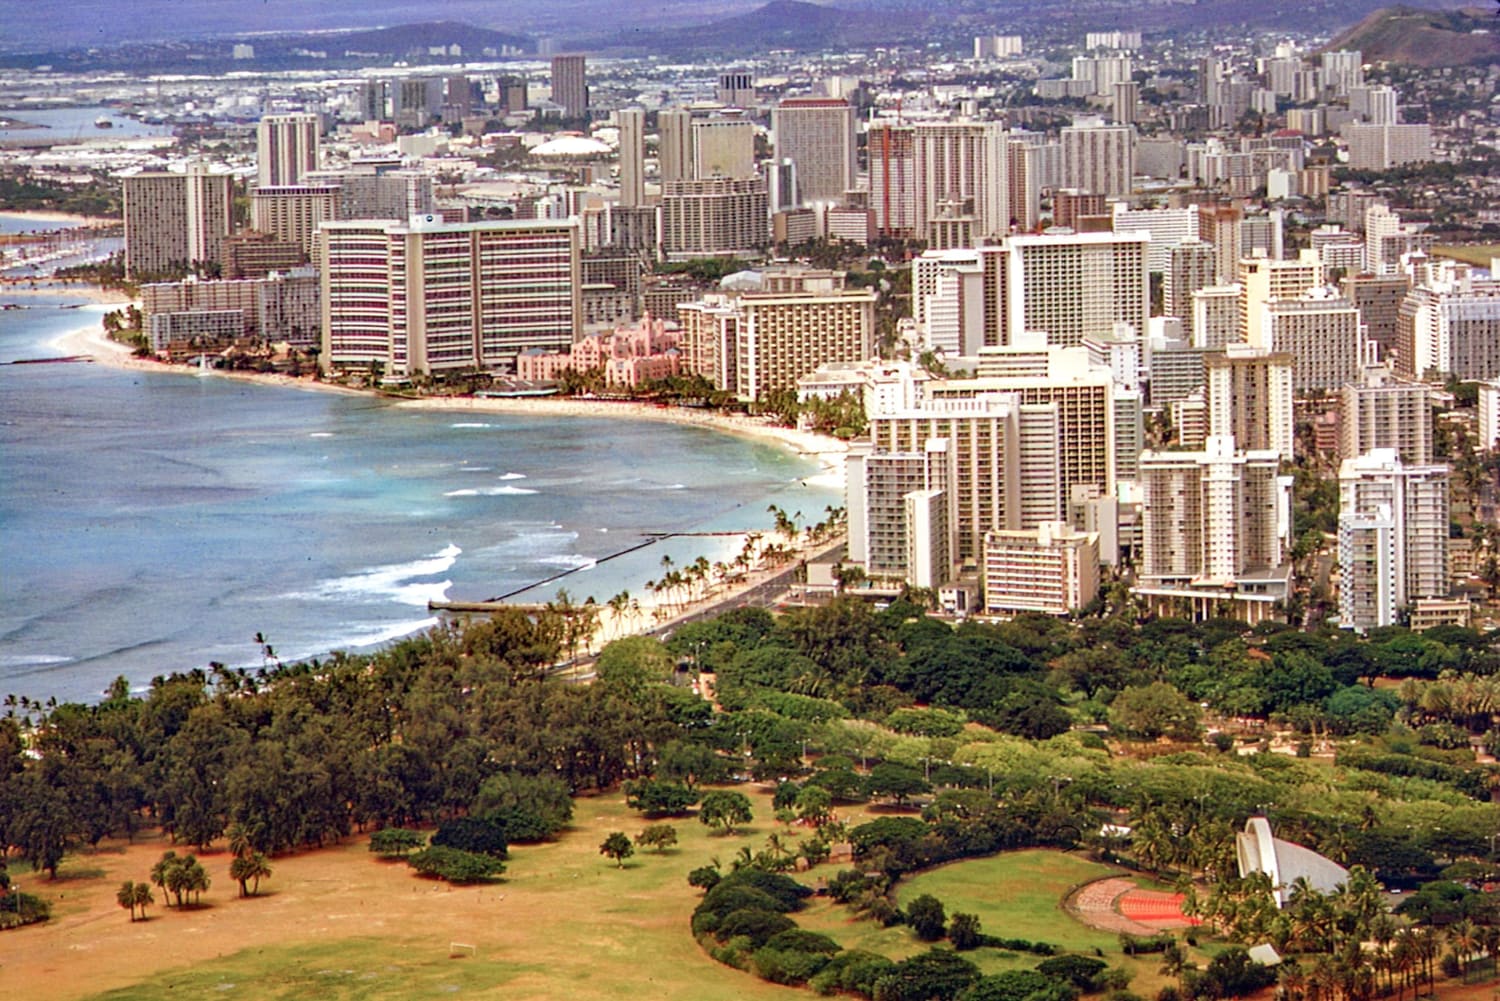 1973 view of Waikiki, Hawaii